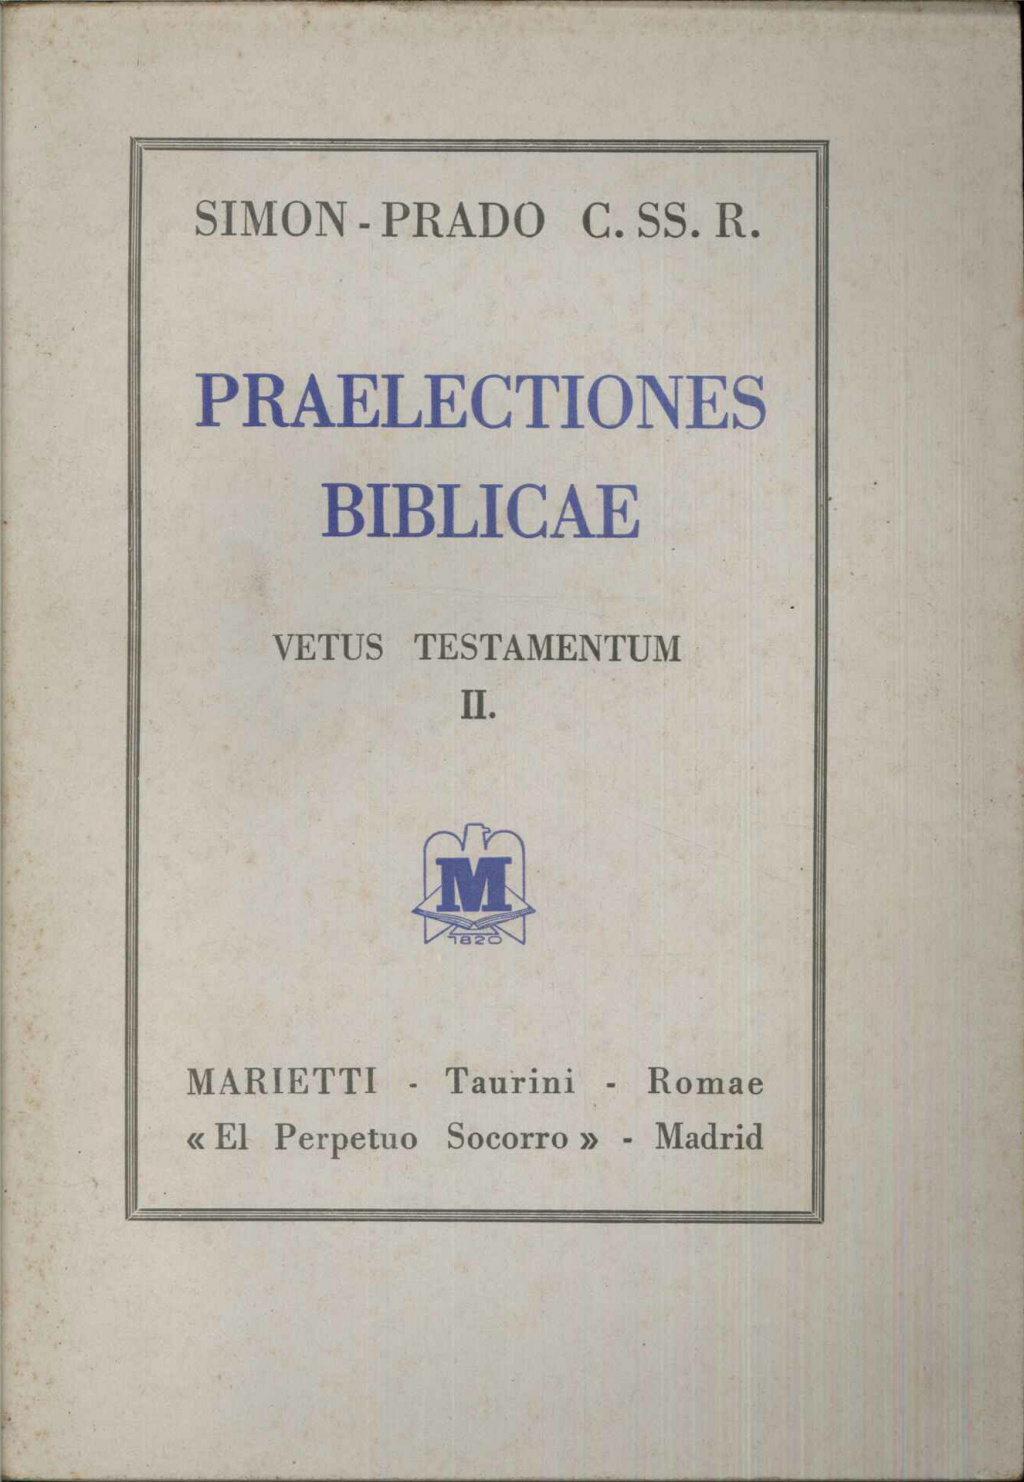 Praelectiones biblicae vol. II vetus testamentum